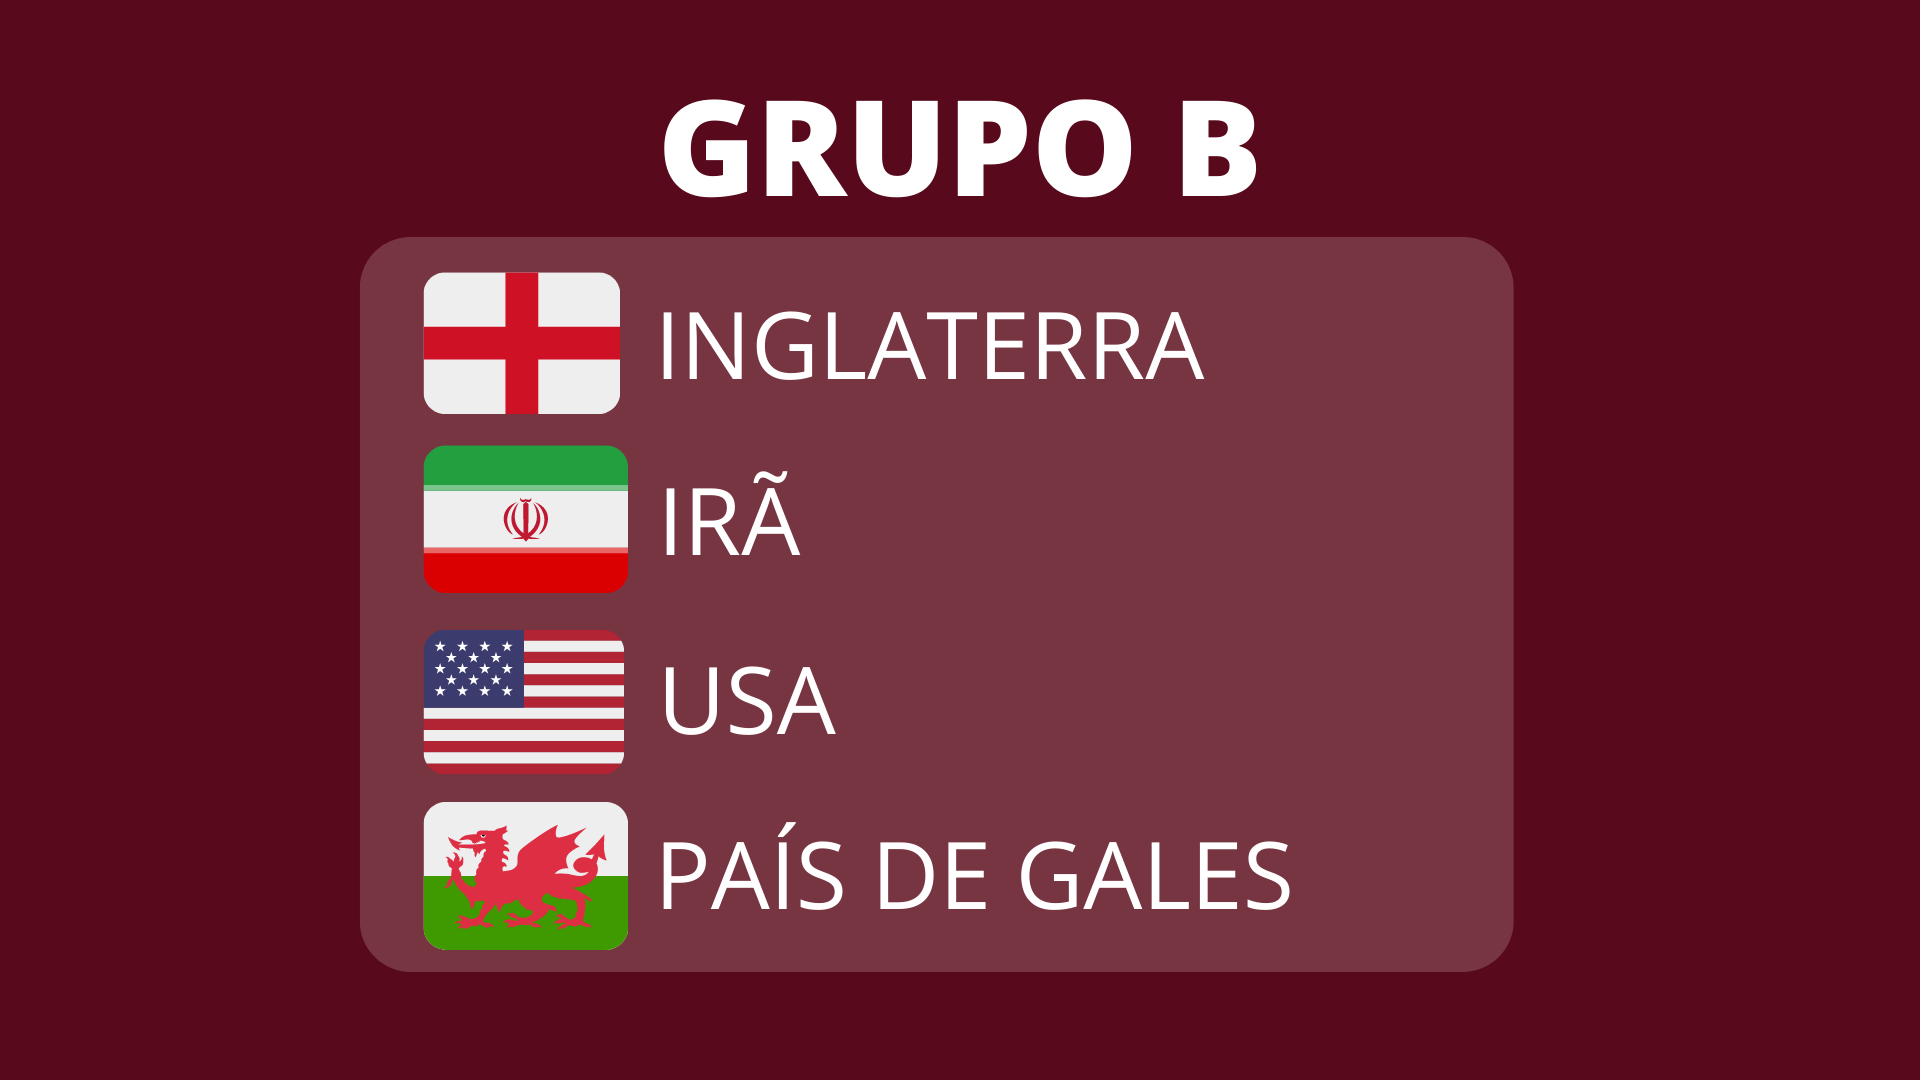 Grupo B Copa